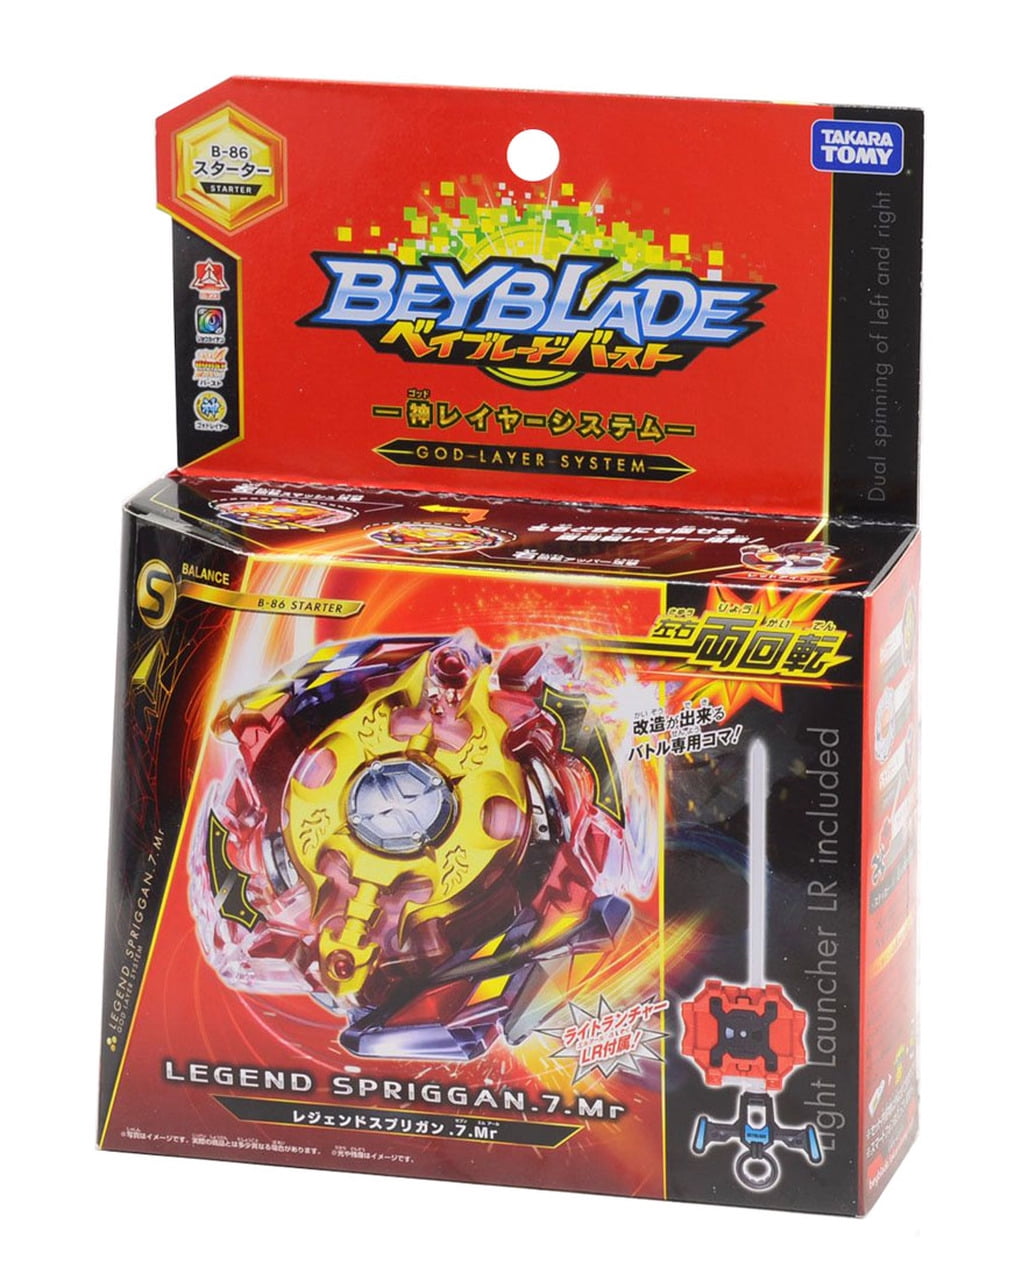 Beyblade burst starter Legend bayblade without launcher stater set high Quality 